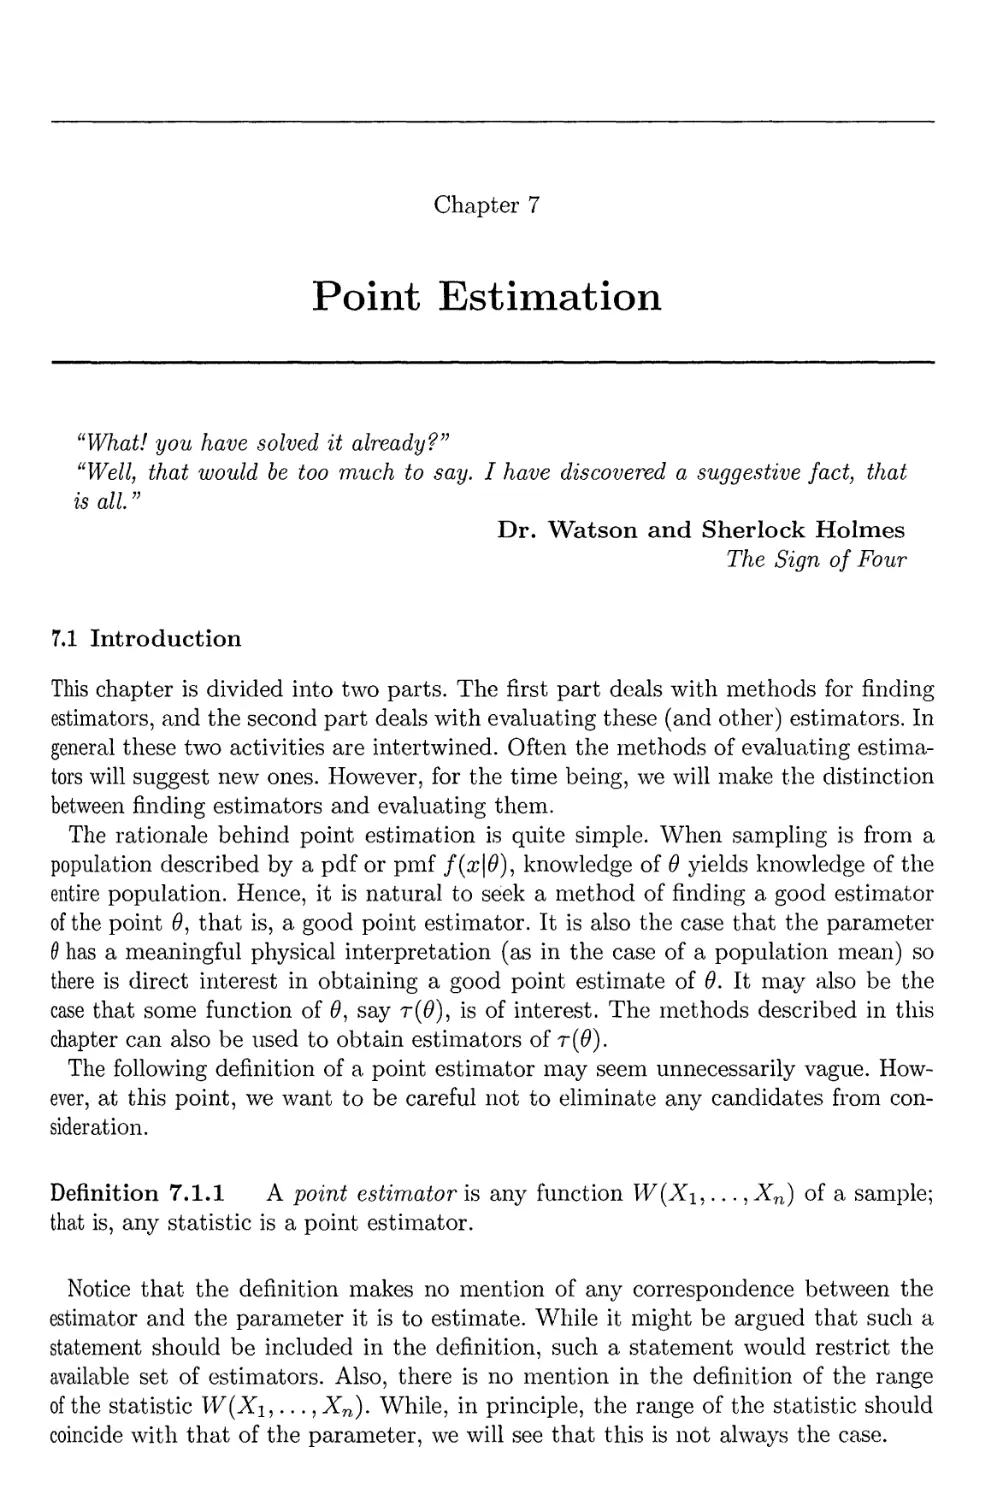 7. Point Estimation